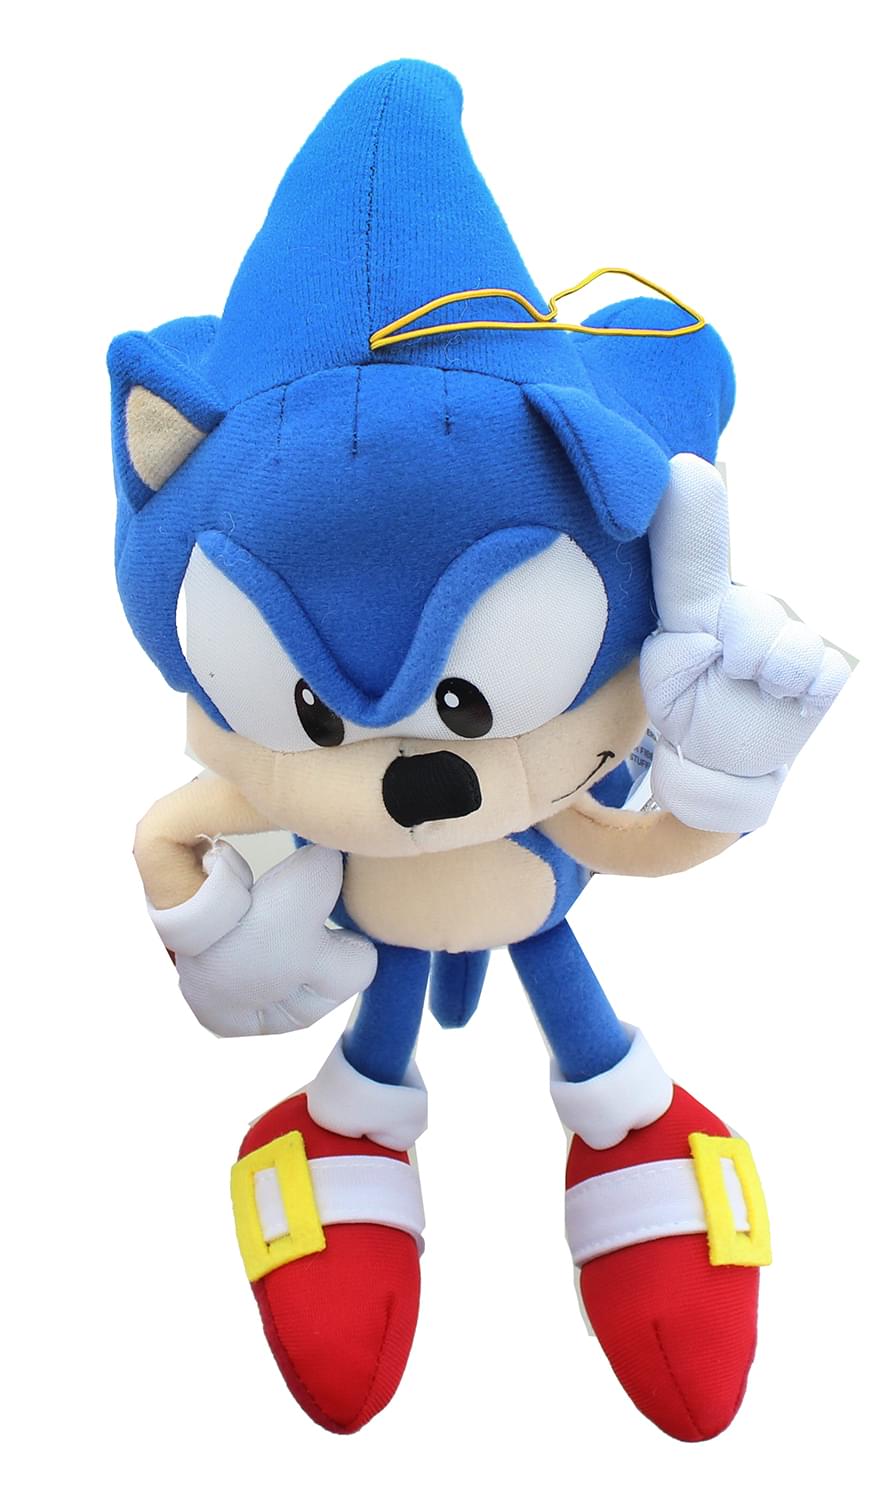 Sonic the Plush